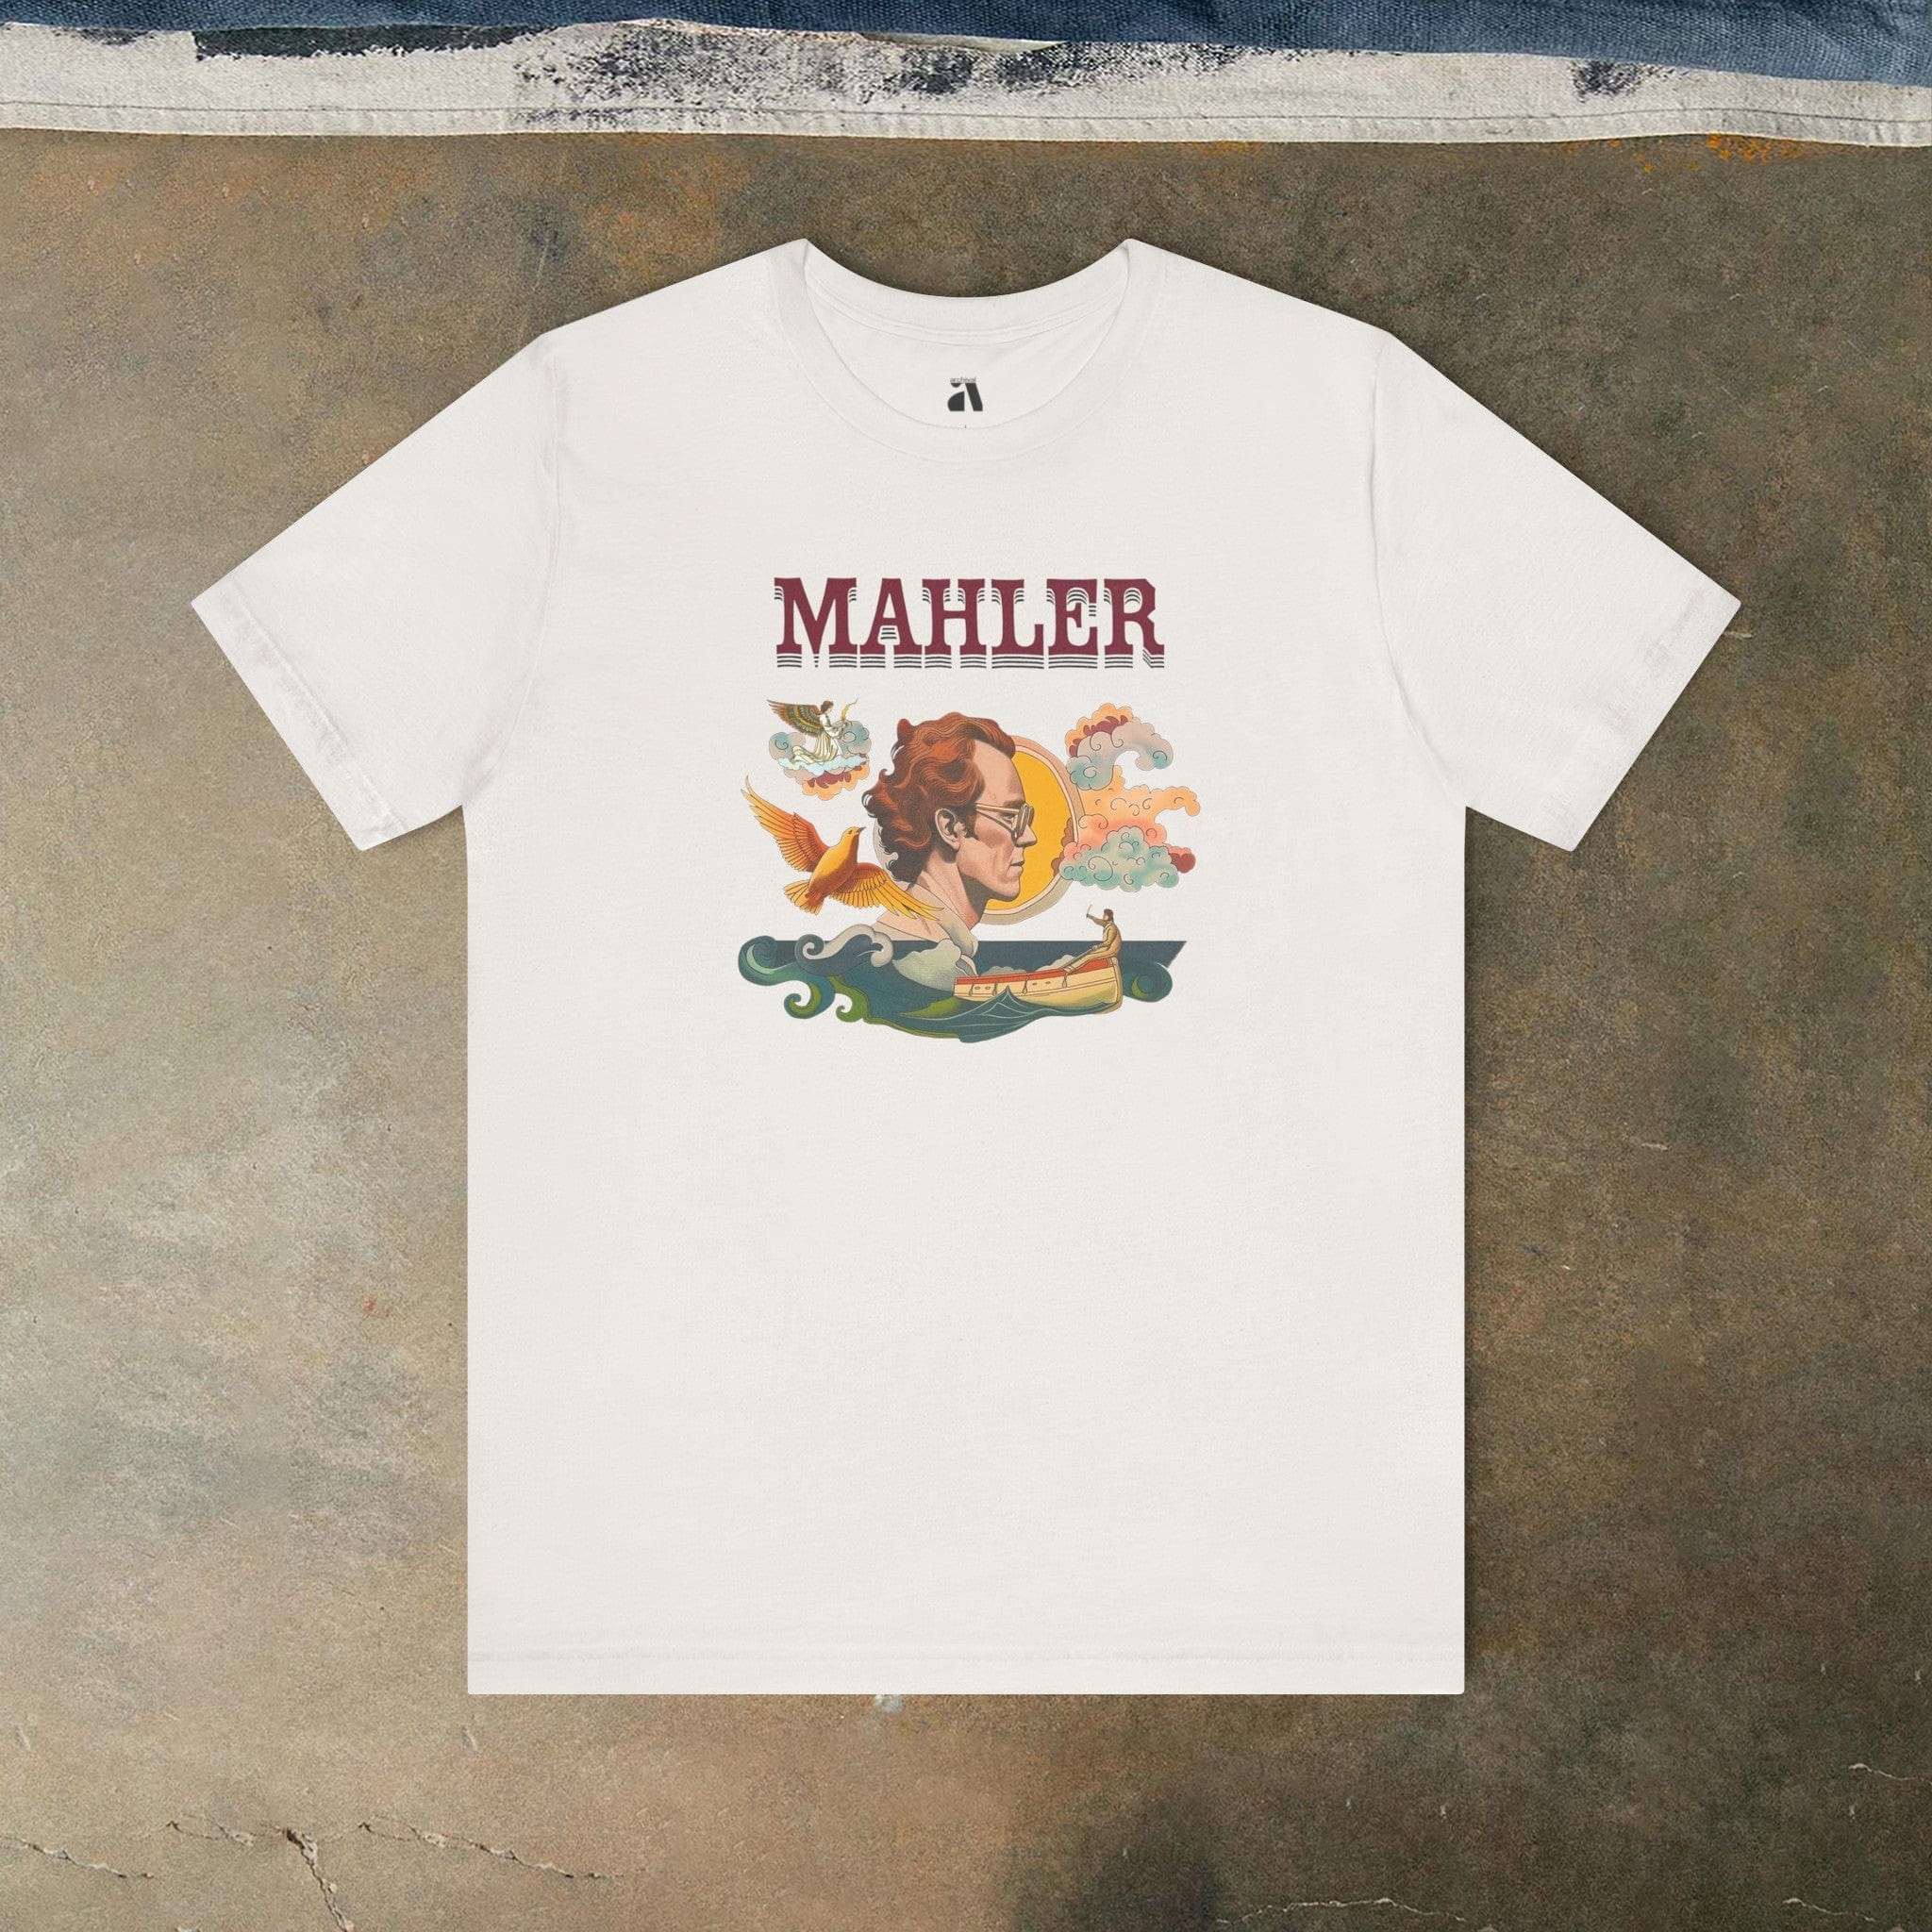 Mahler: Illustrated T-Shirt